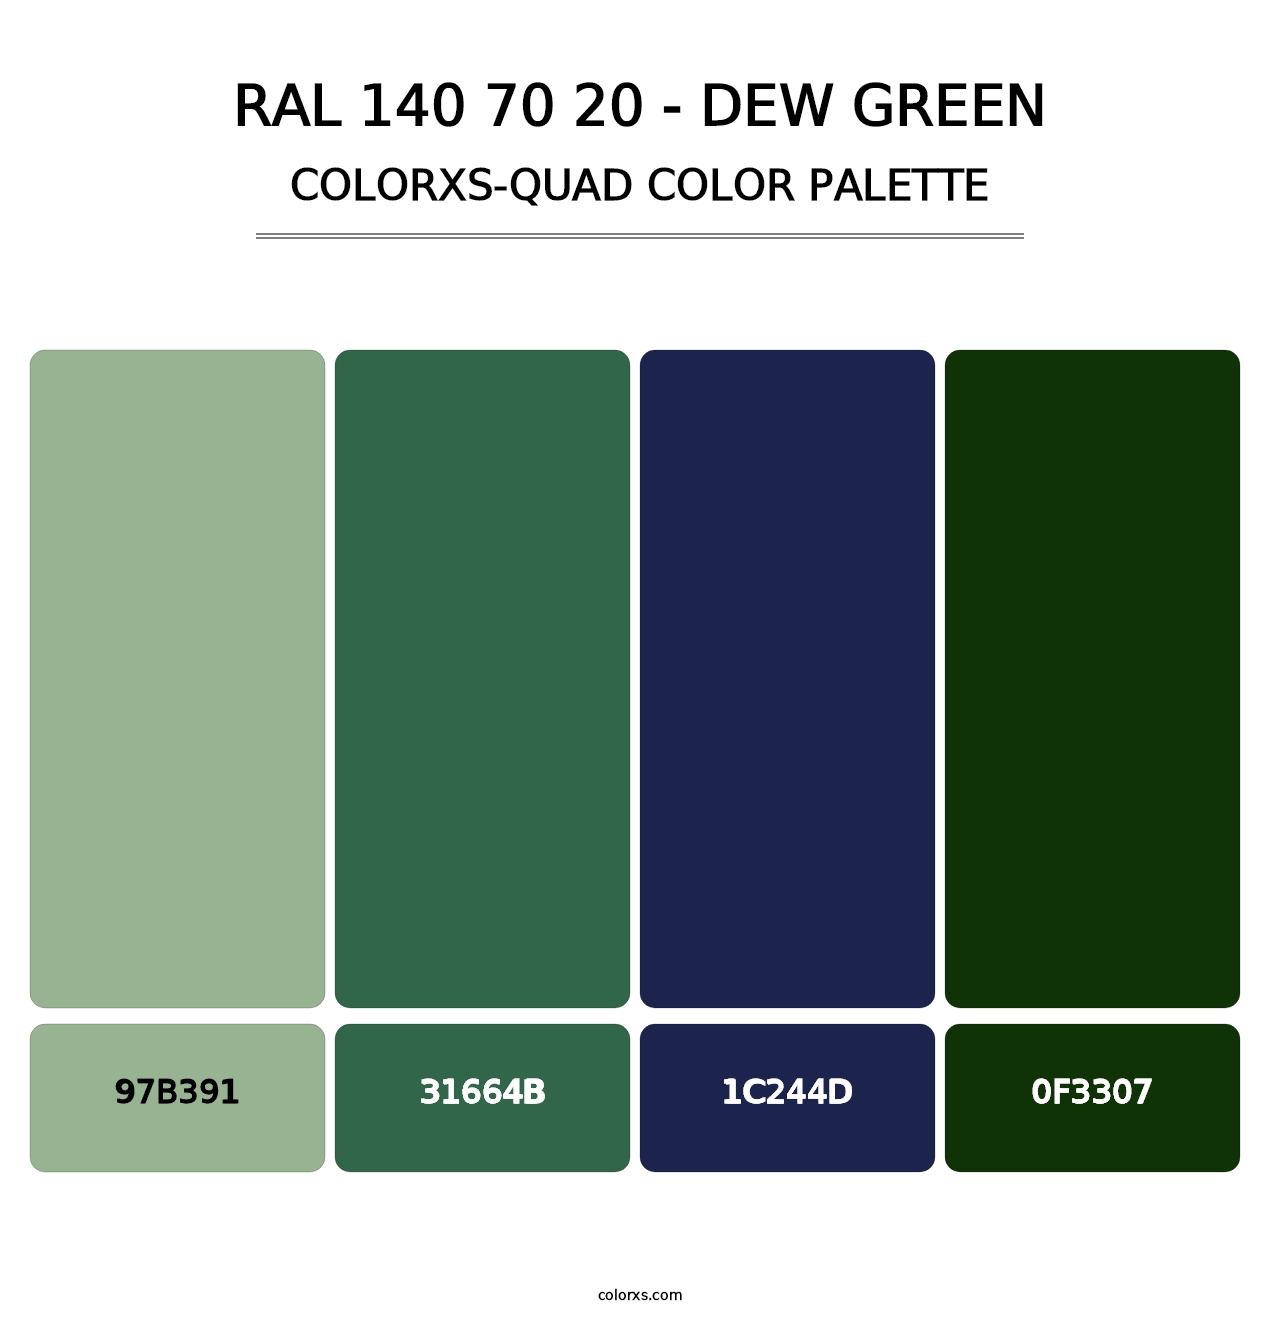 RAL 140 70 20 - Dew Green - Colorxs Quad Palette